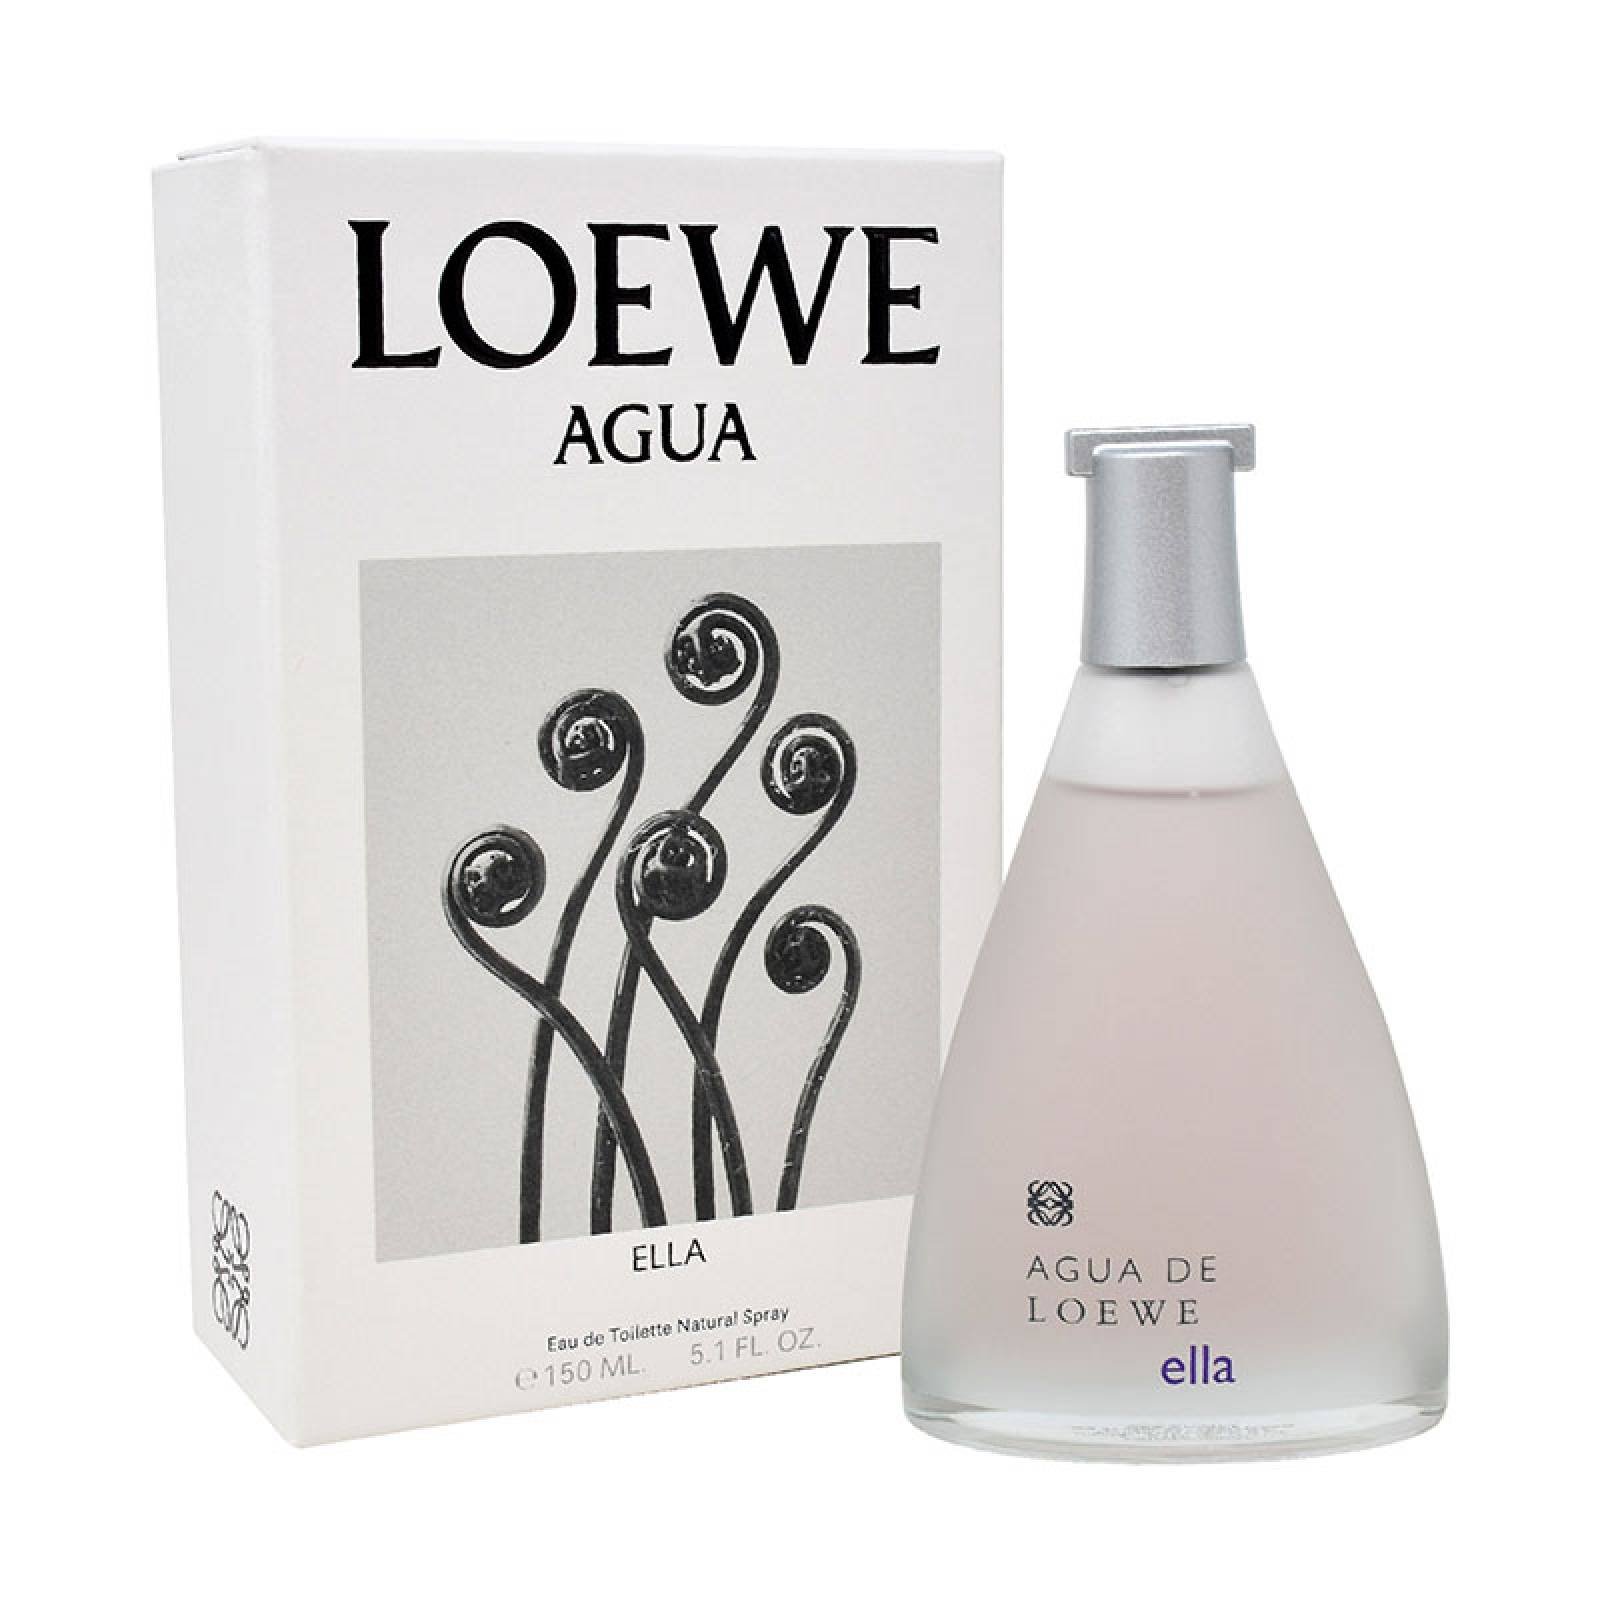 Agua De Loewe Ella 150 ml Edt Spray de Loewe